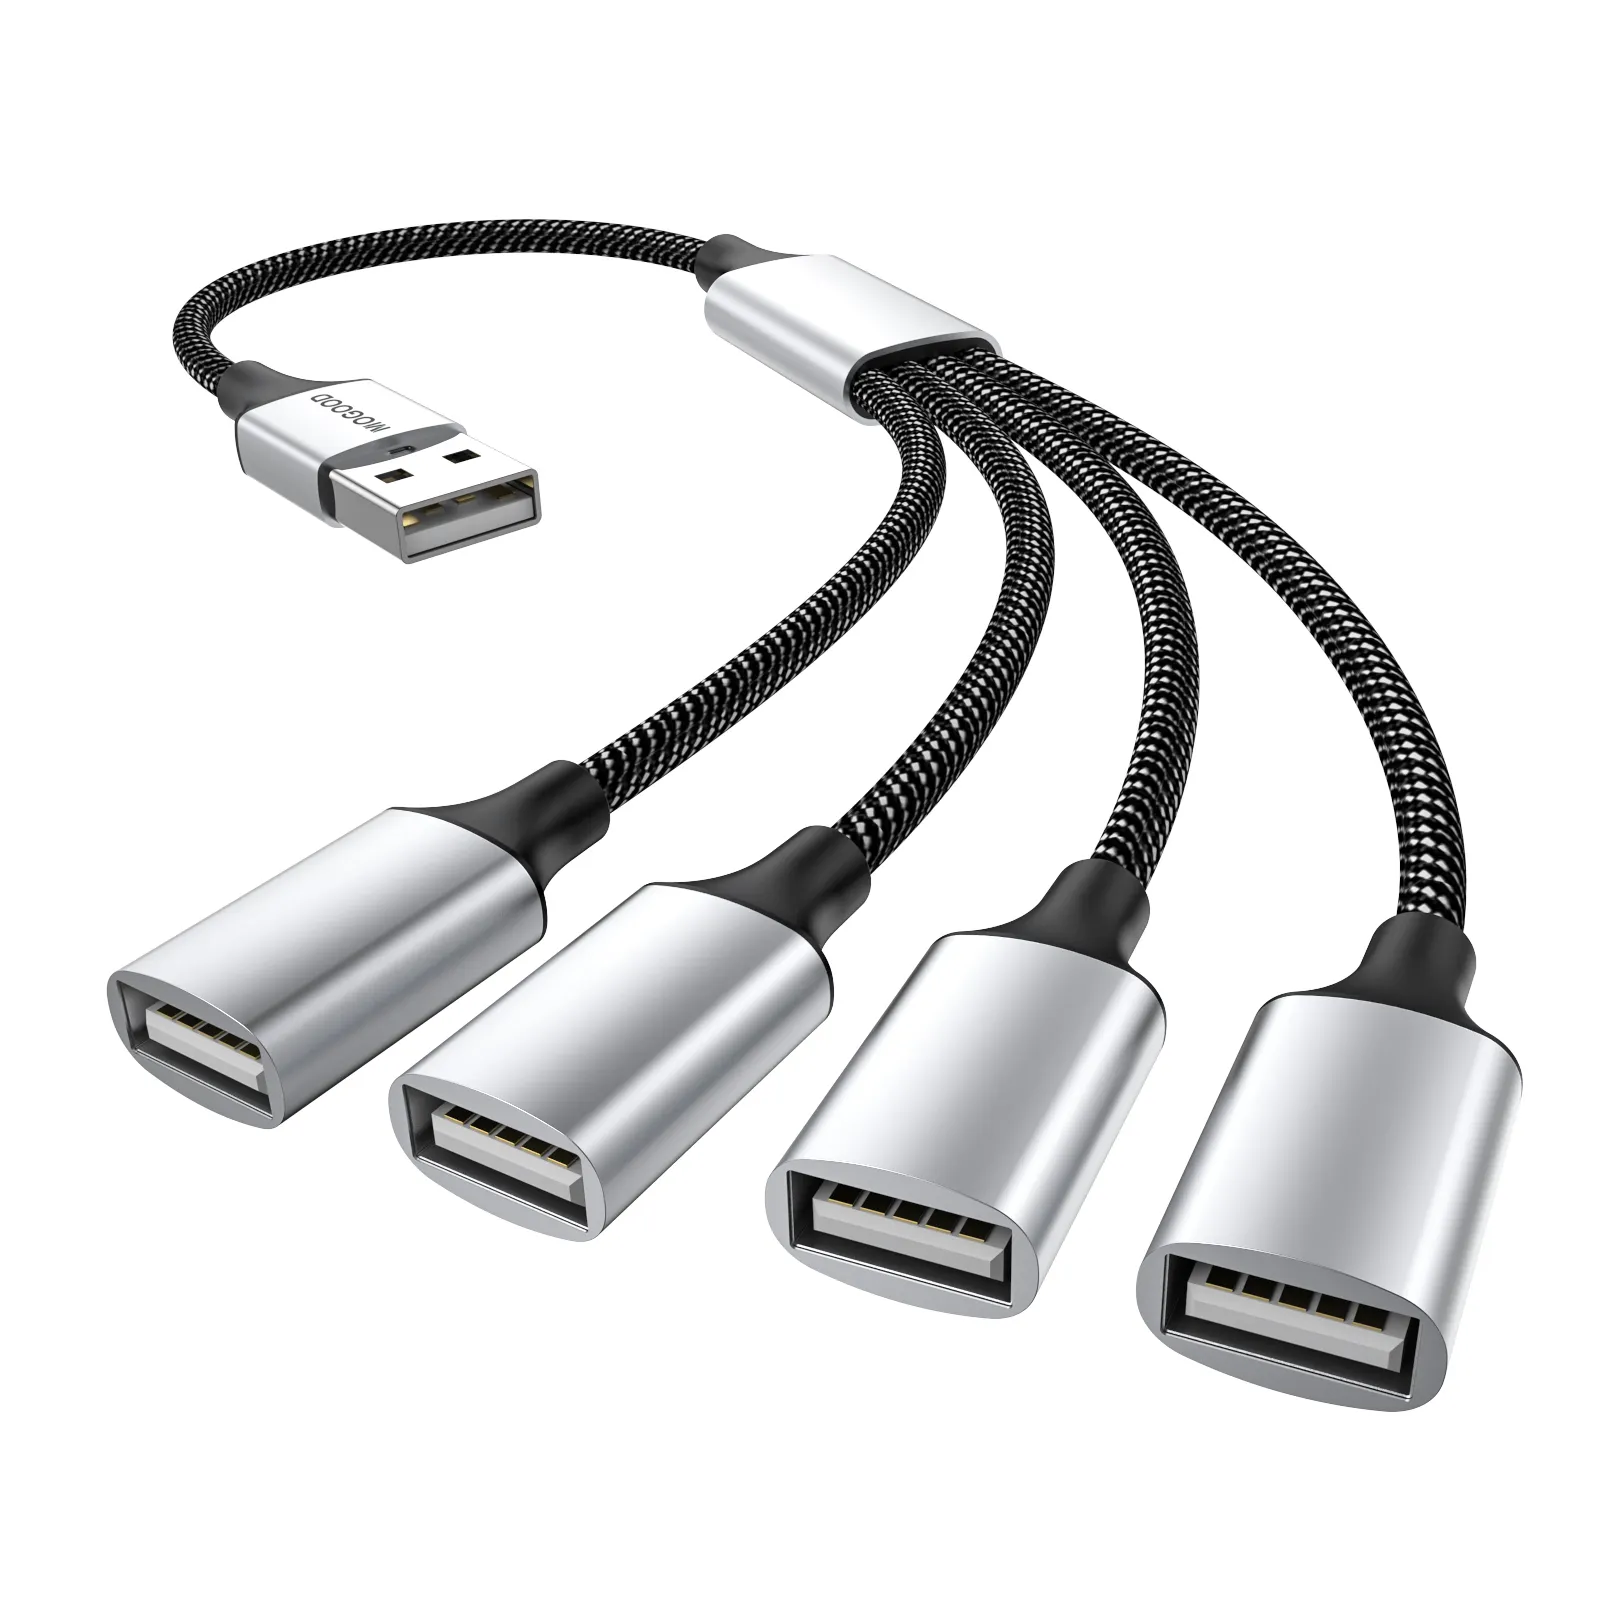 USB to 4 USB female 2.0 OTG Splitter Cord Converter usb